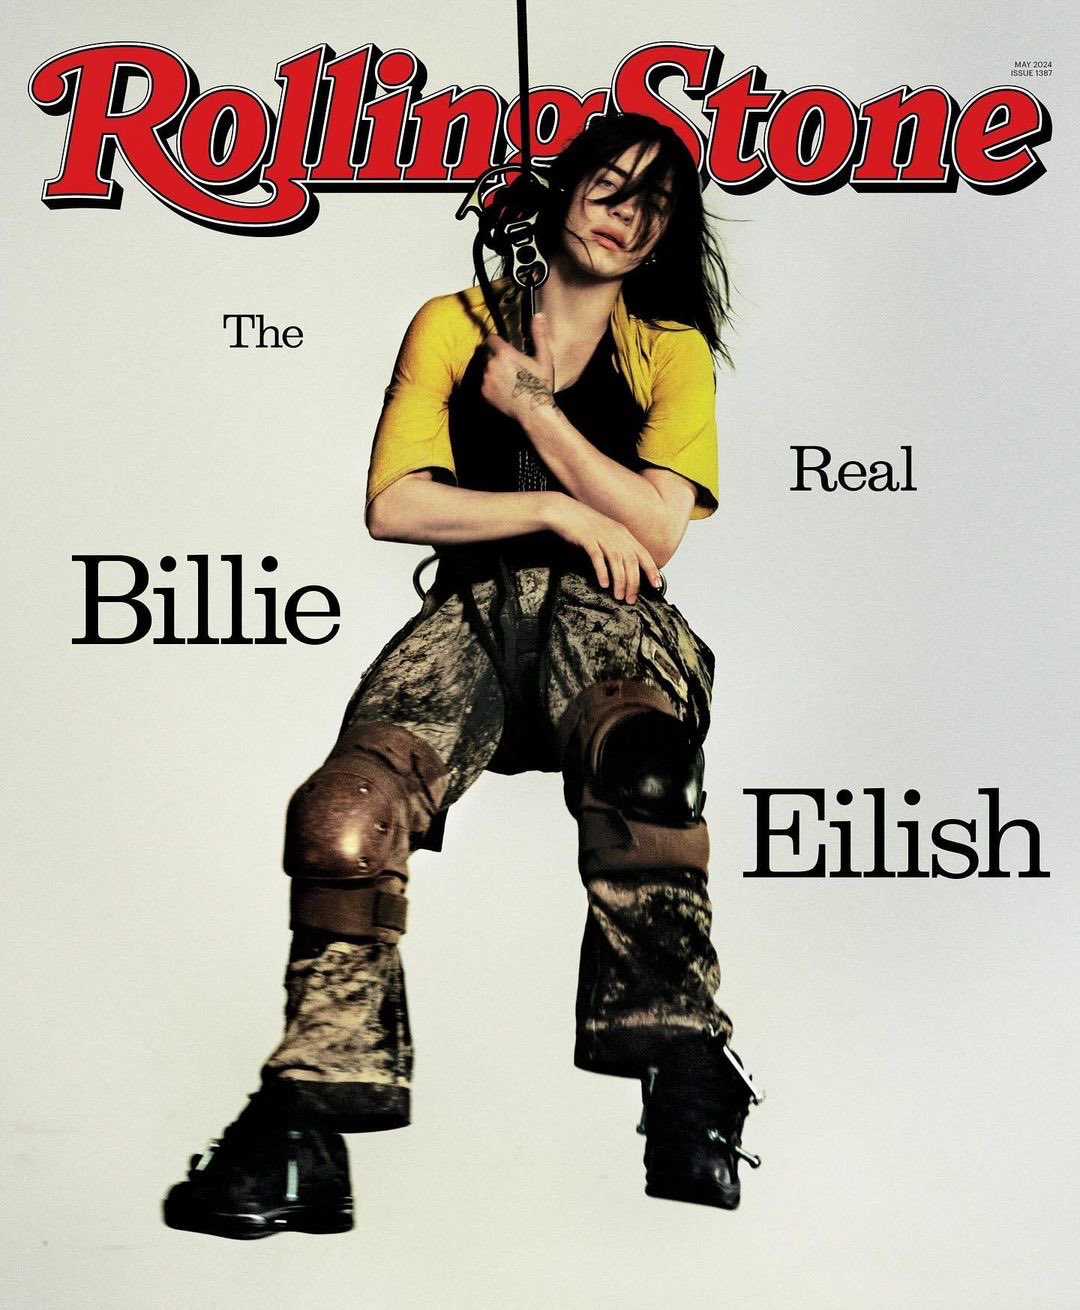 billie_rolling_stone_202405_cover.jpg